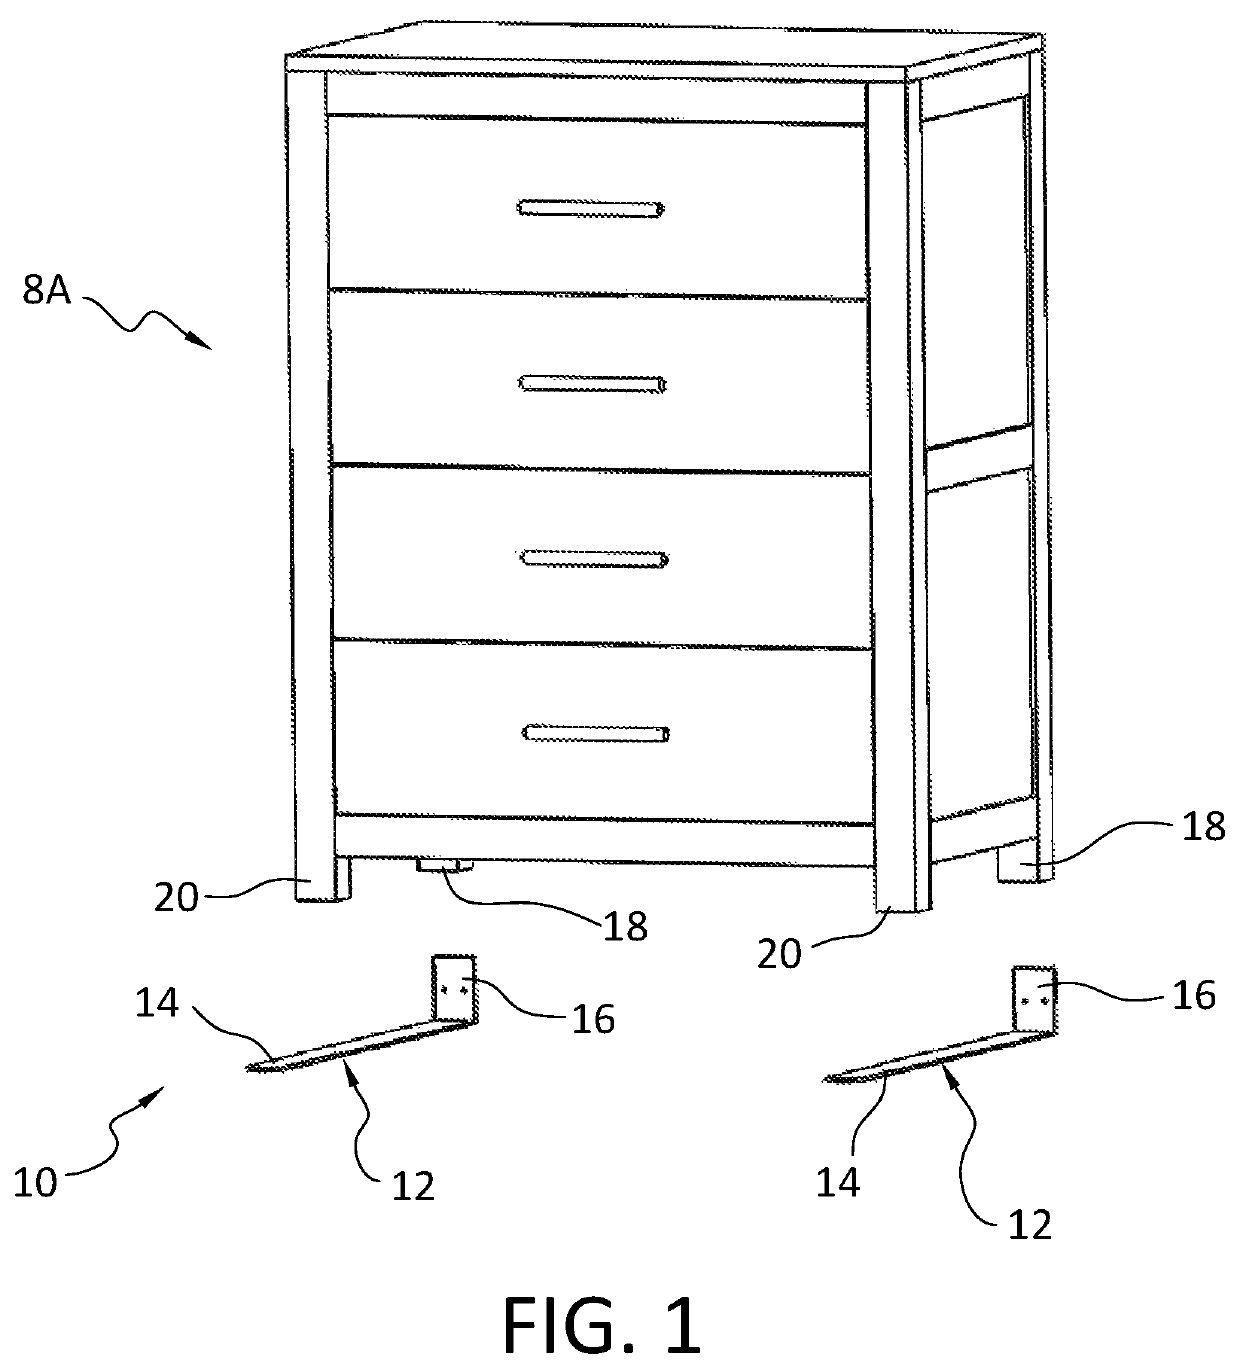 L-shaped furniture anti-tipping mechanisms